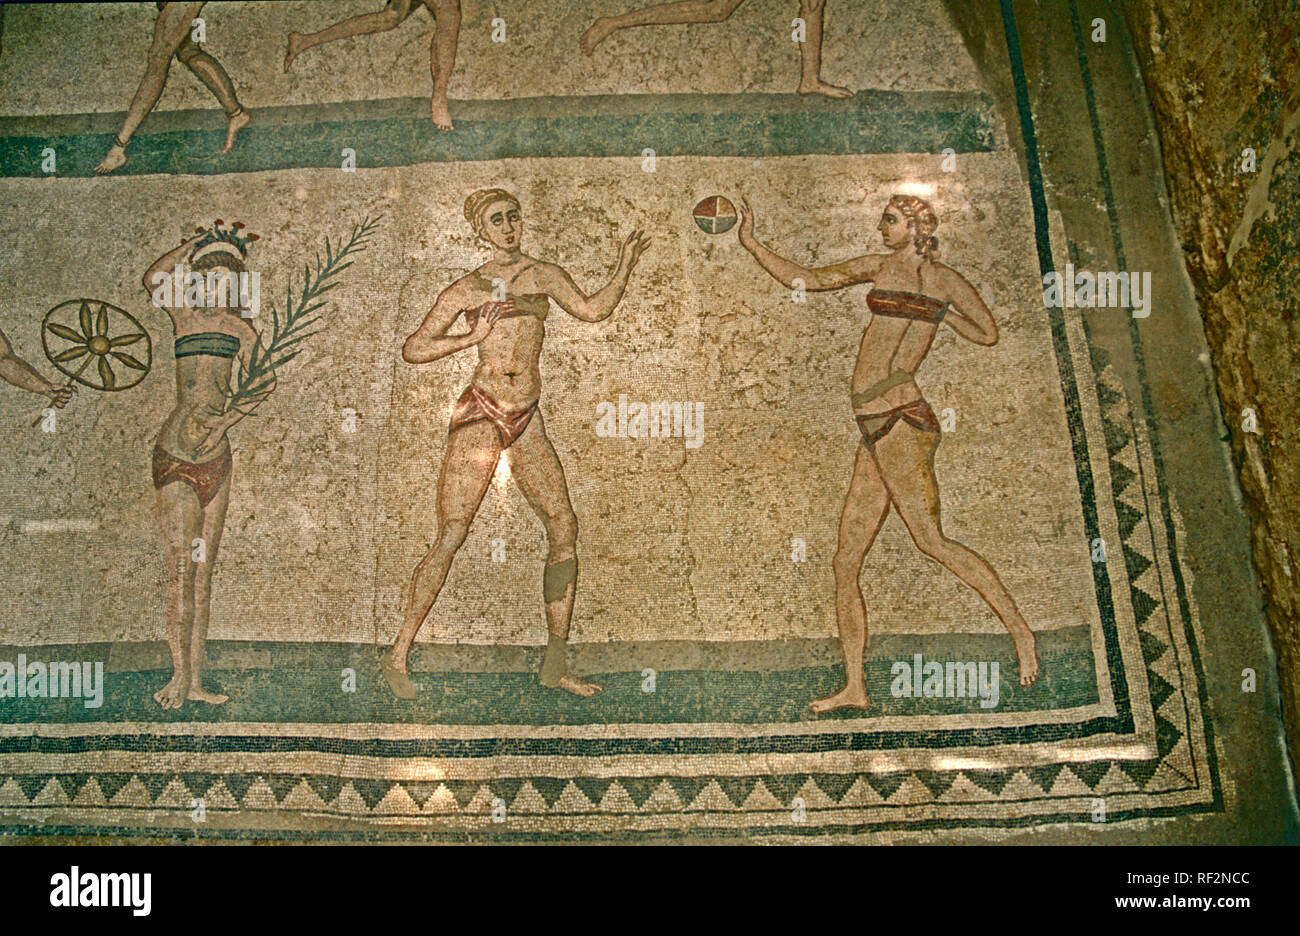 Sicily Europe Imperial Villa Romana Del Casala Mosaic Hall of the Female Gymnasts in Bikinis Roman Stock Photo